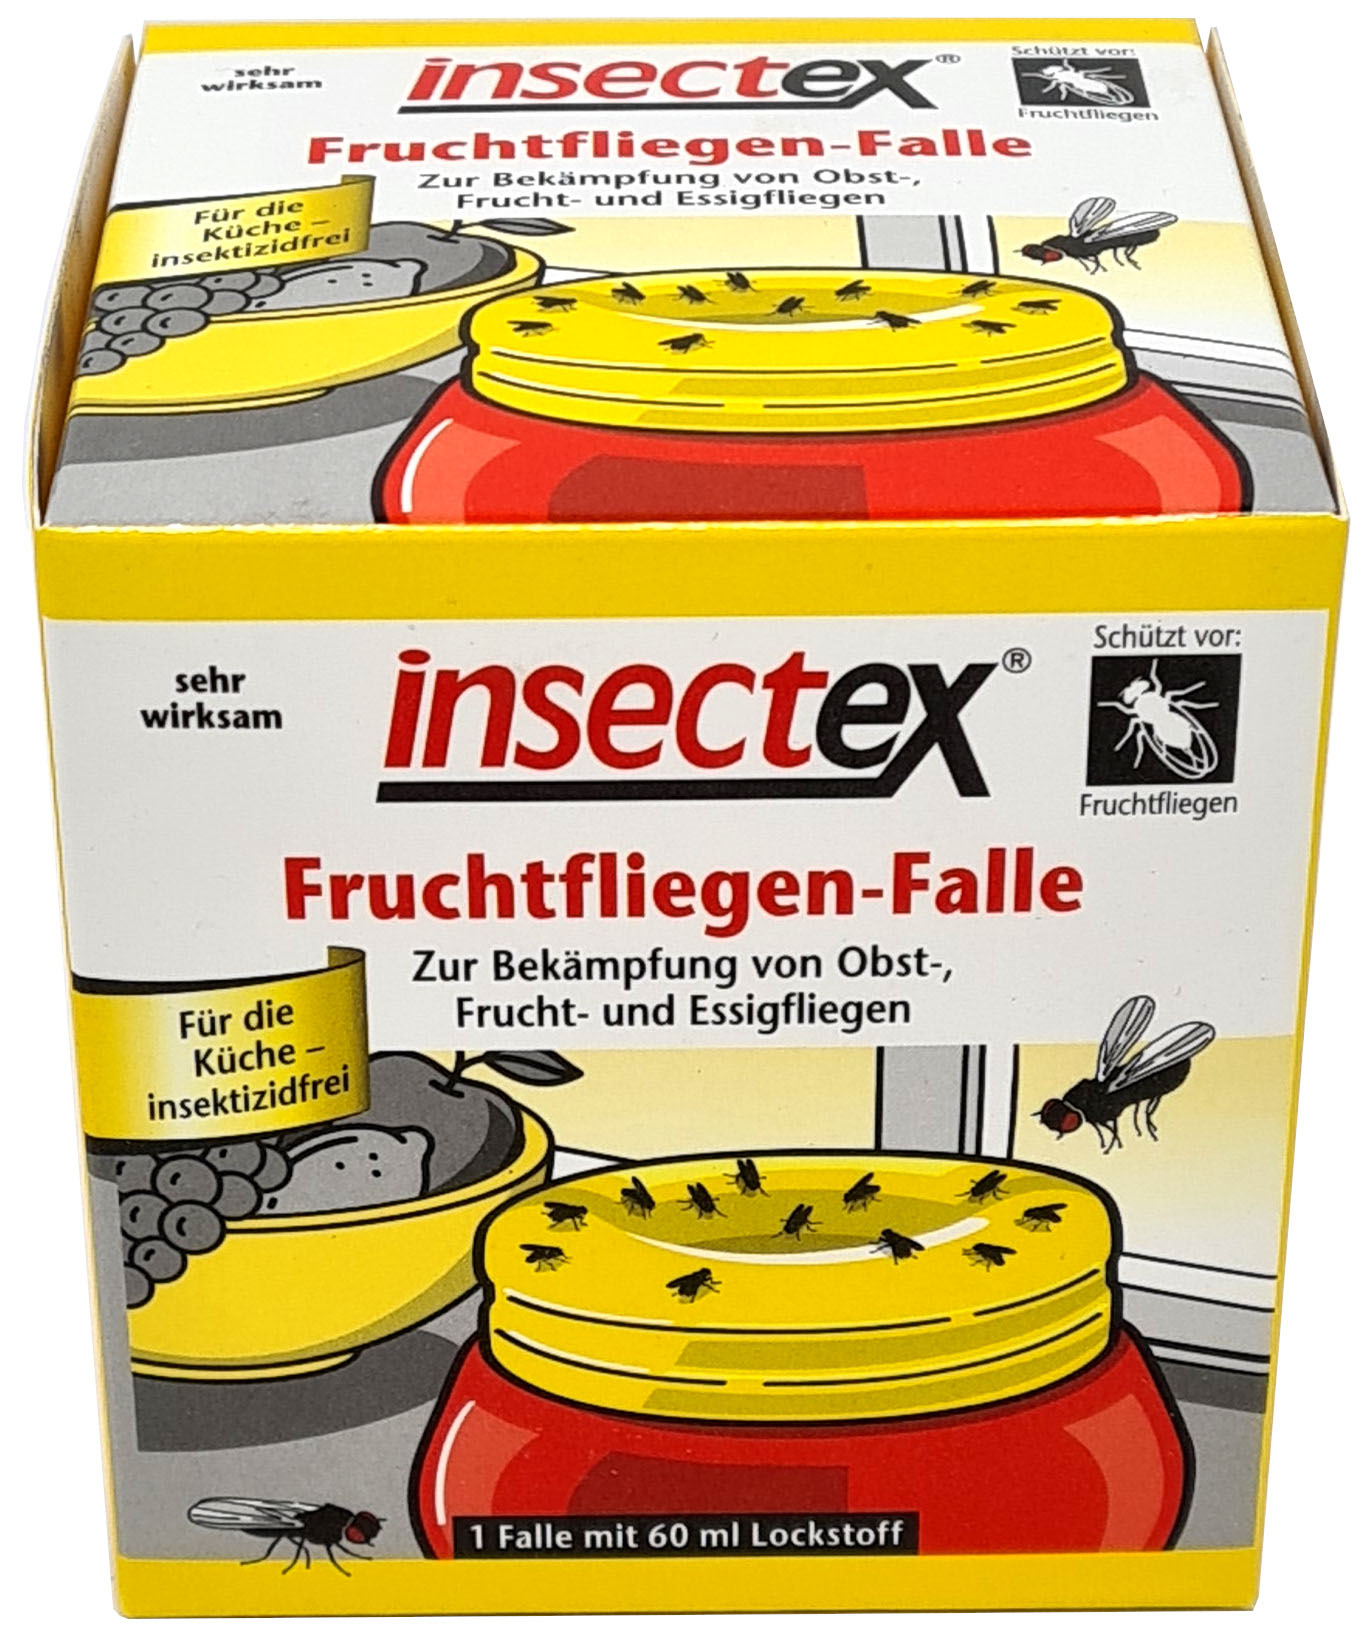 02166 - insectex Fruchtfliegenfalle 60ml BIOZID